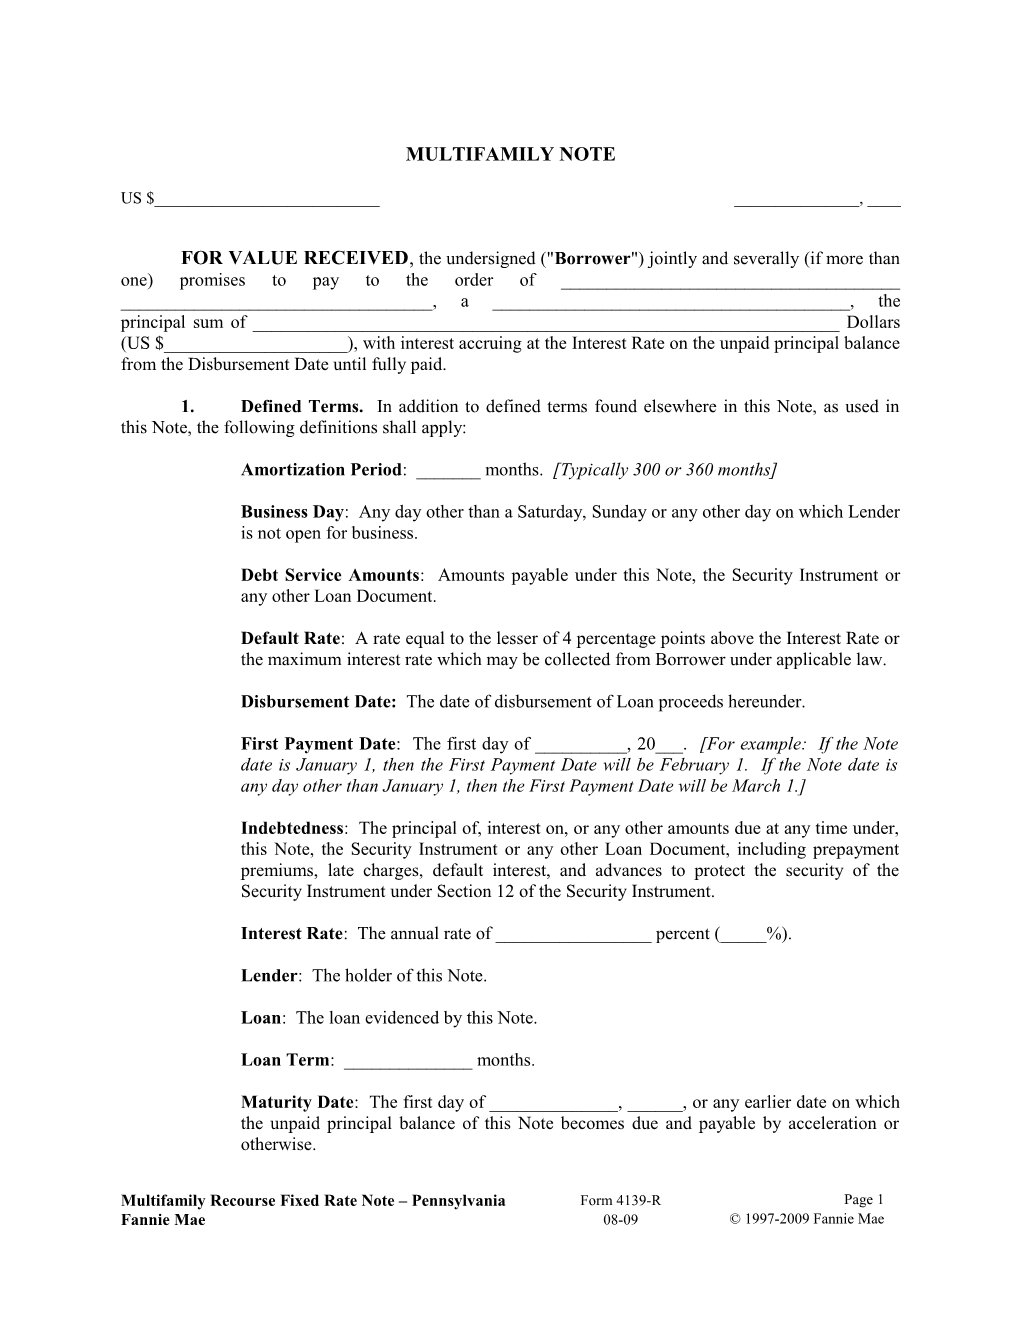 Multifamily Form 4139-R Pennsylvania